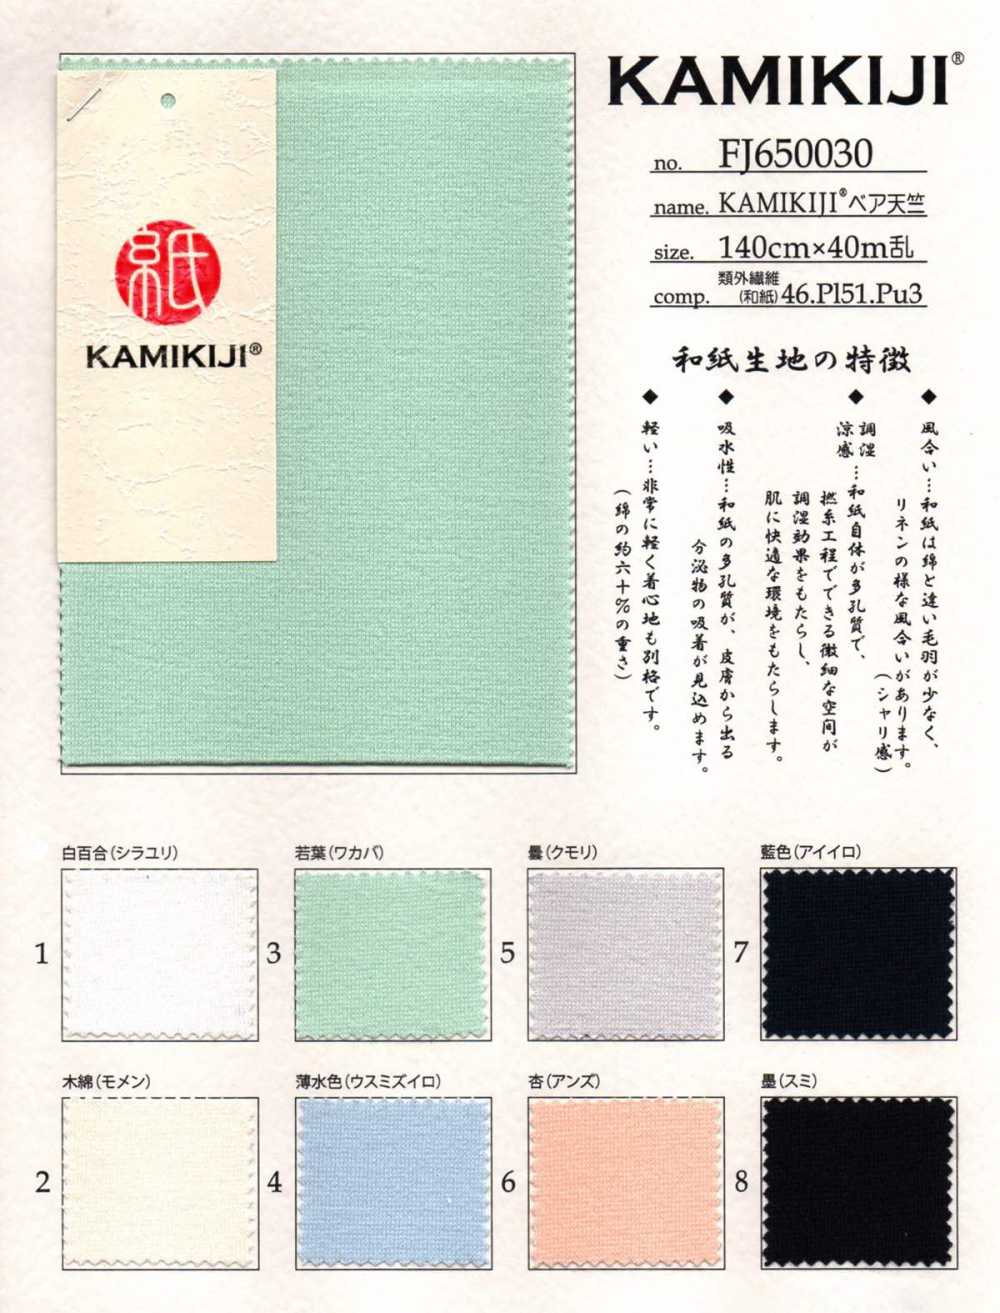 FJ650030 KAMIKIJI® 베어 싱글 다이마루[원단] Fujisaki Textile